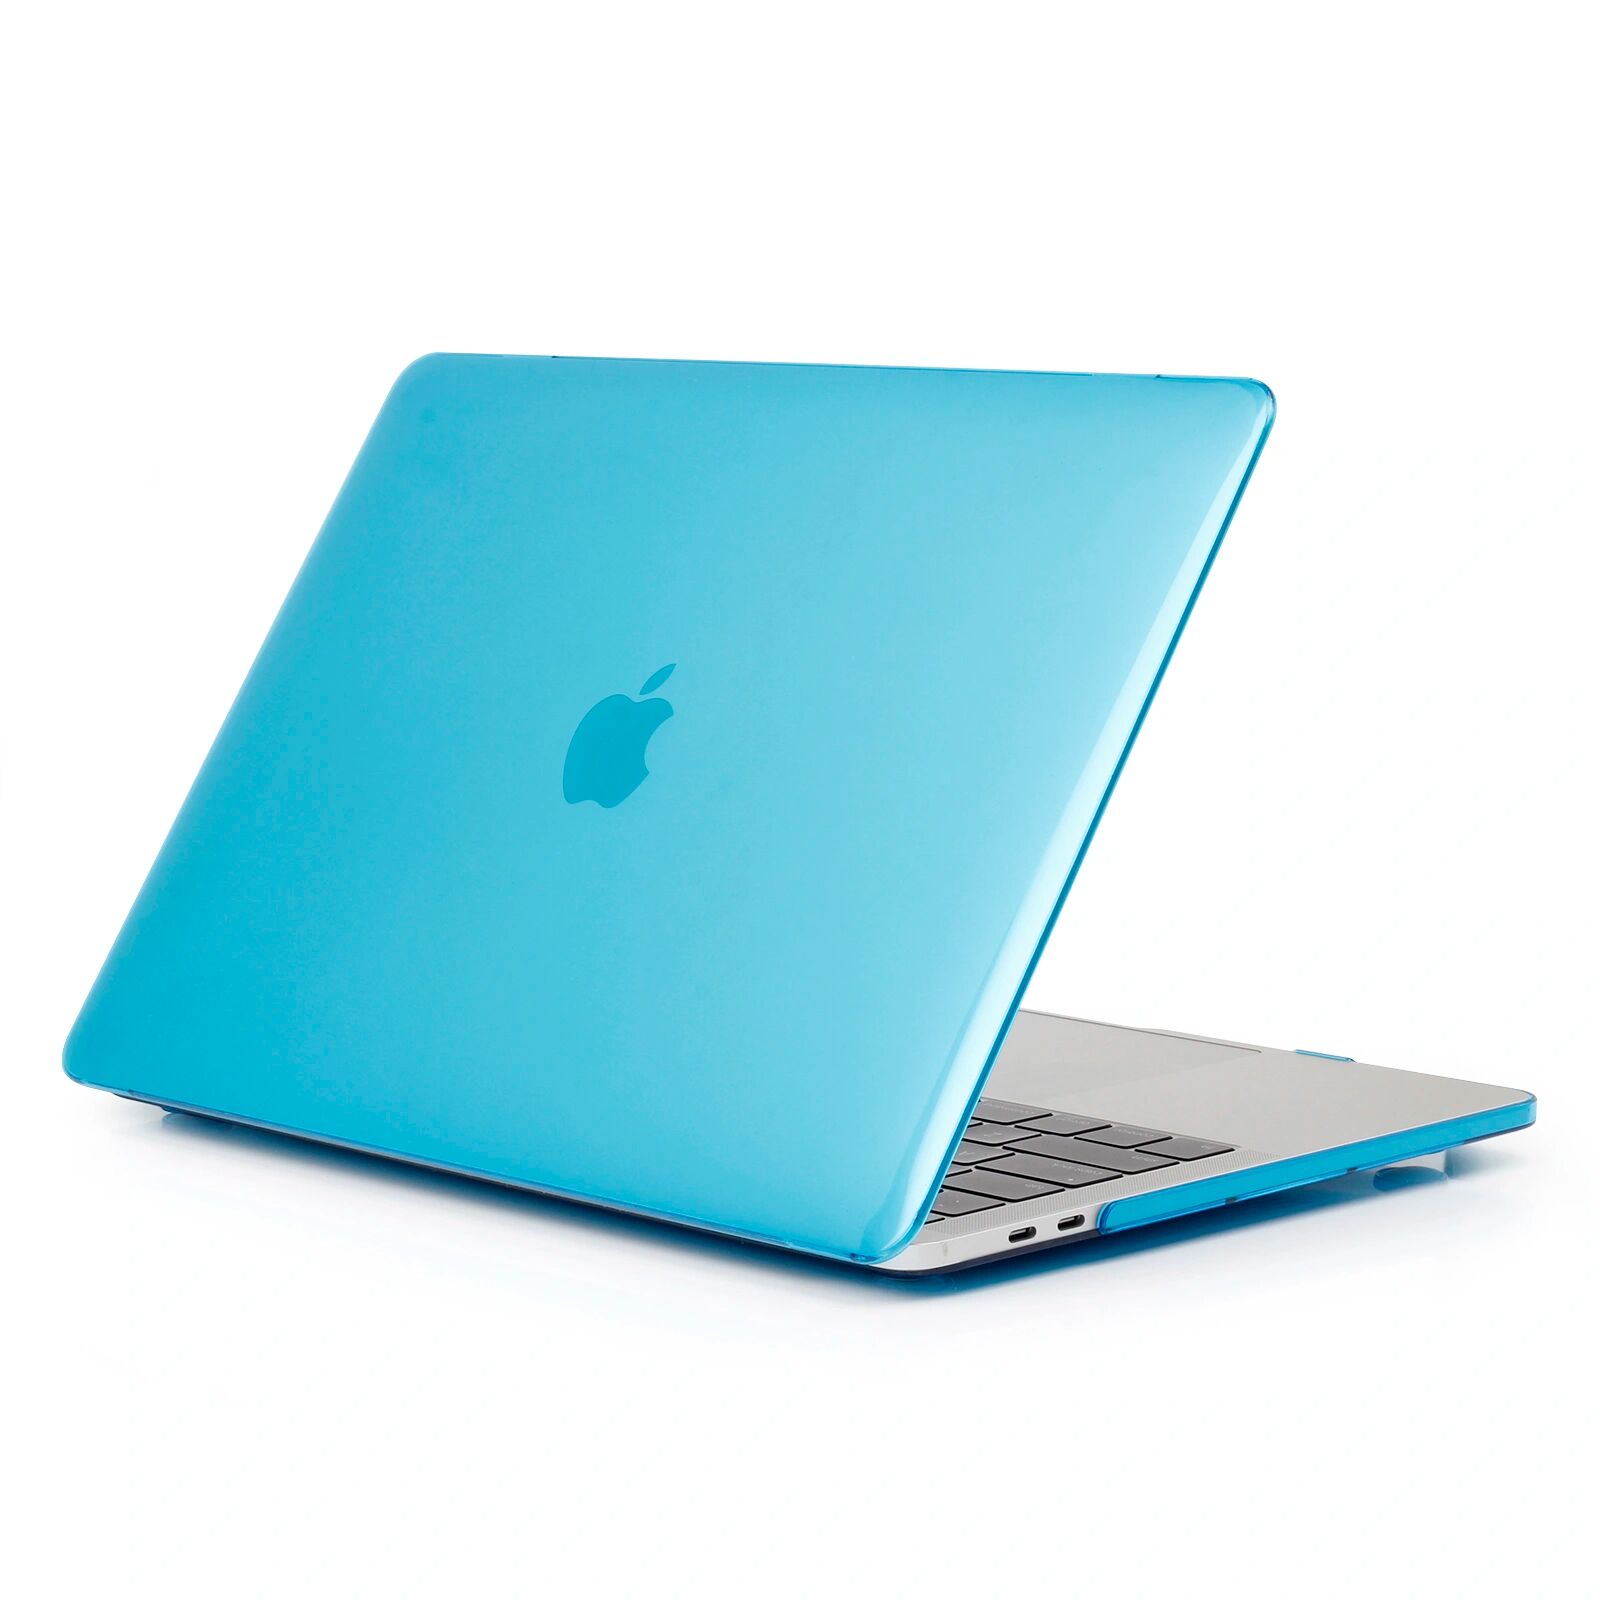 iPouzdro.cz Ochranný kryt na MacBook Pro 15 (2012-2015) - Crystal Light Blue